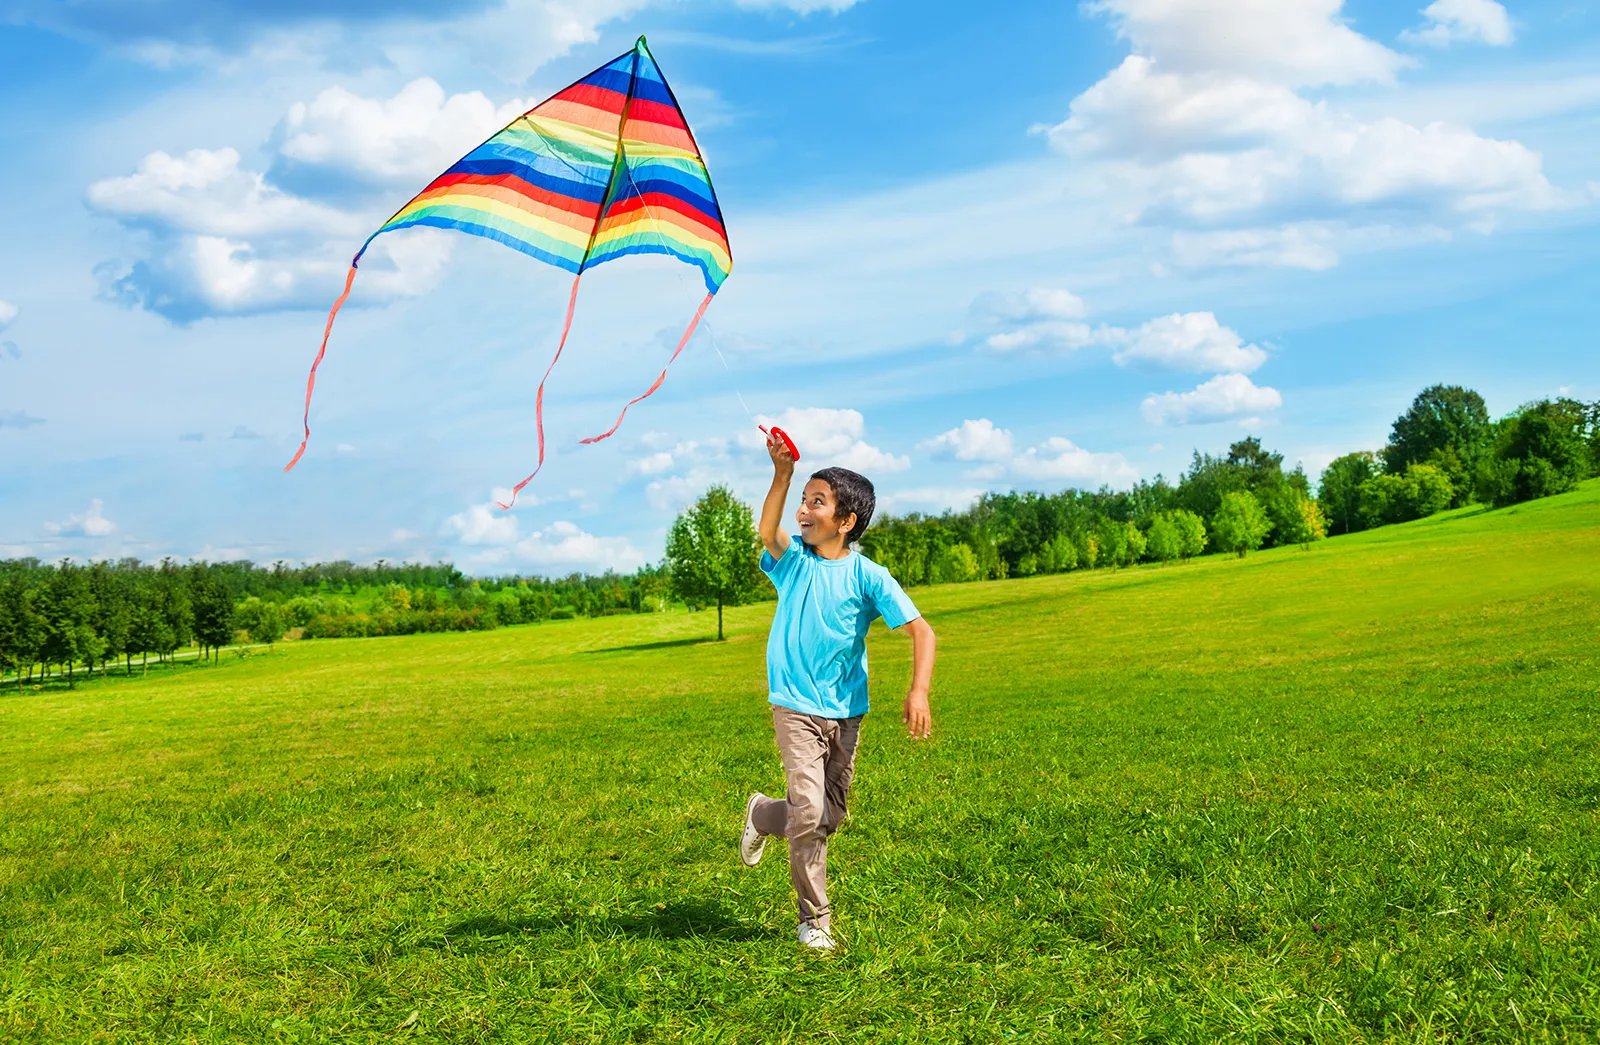 free shipping 10pcs/lot mini kites flying for children kite